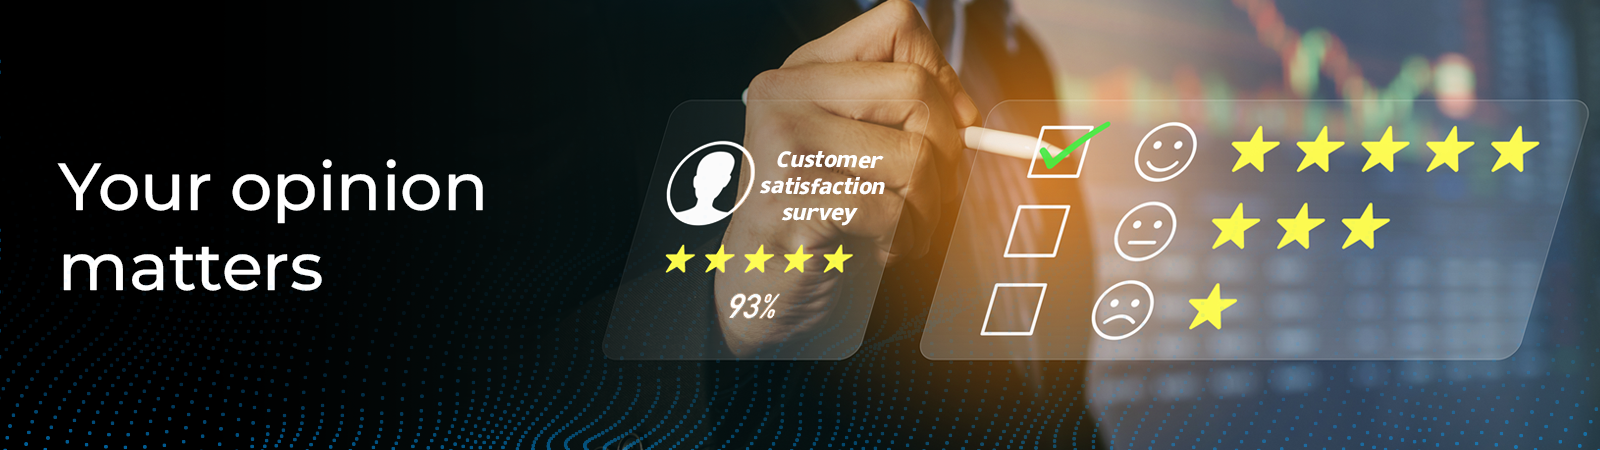 Customer Satisfaction Survey - Algeria Telecom's website